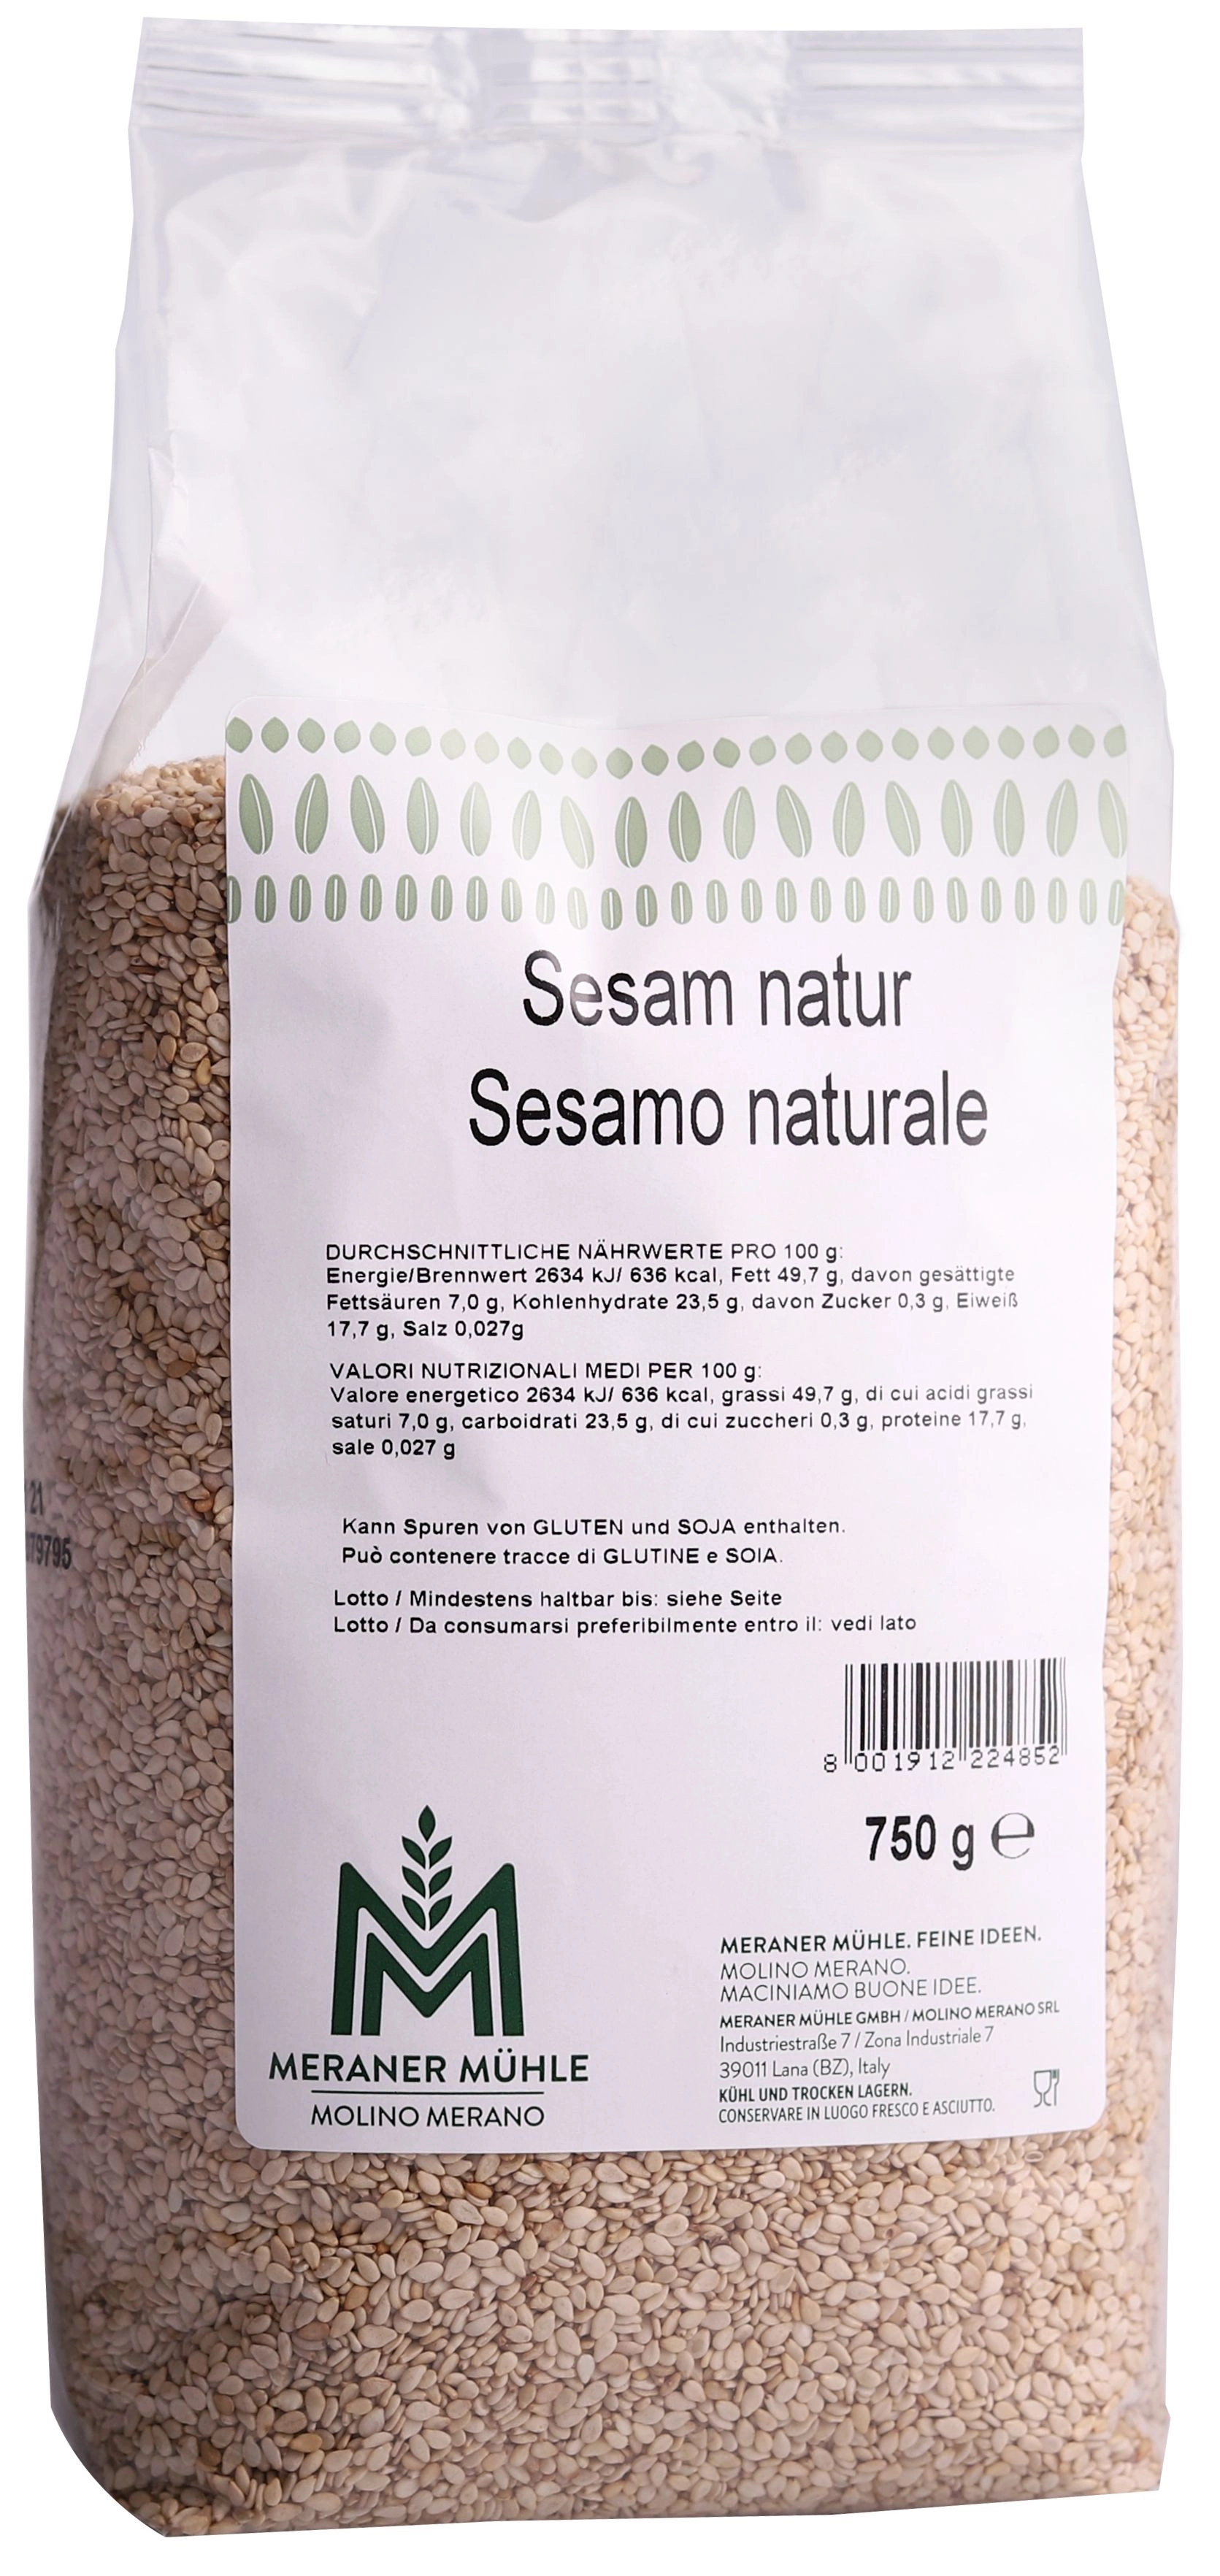 Natural sesame seeds